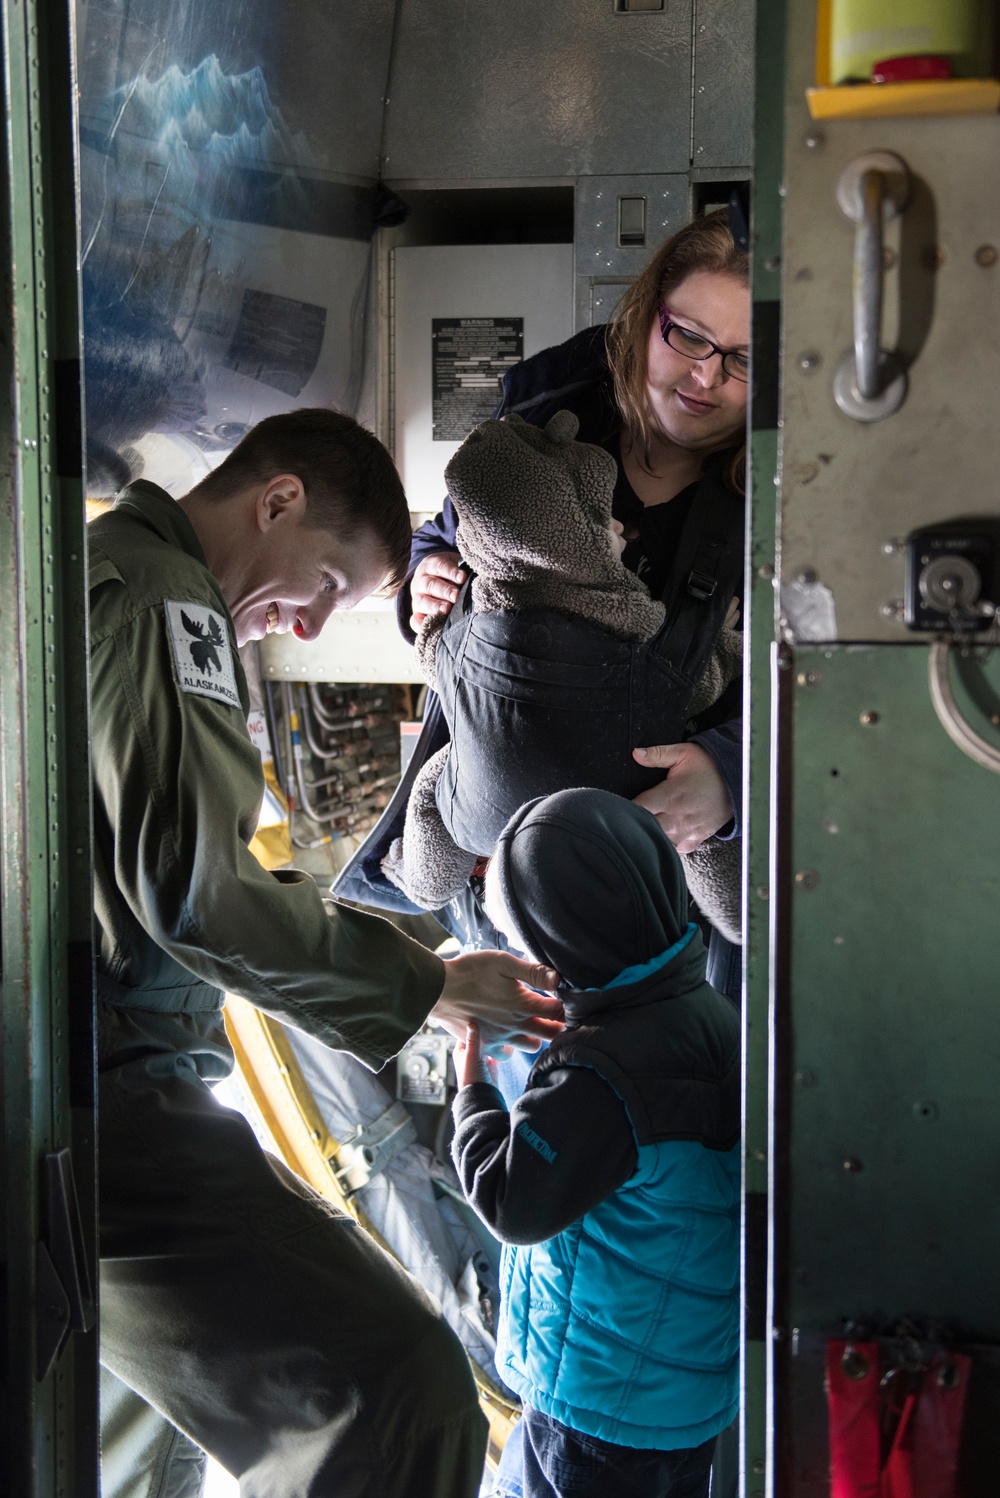 Alaska Air Guardsmen bid farewell to last C-130 Hercules aircraft